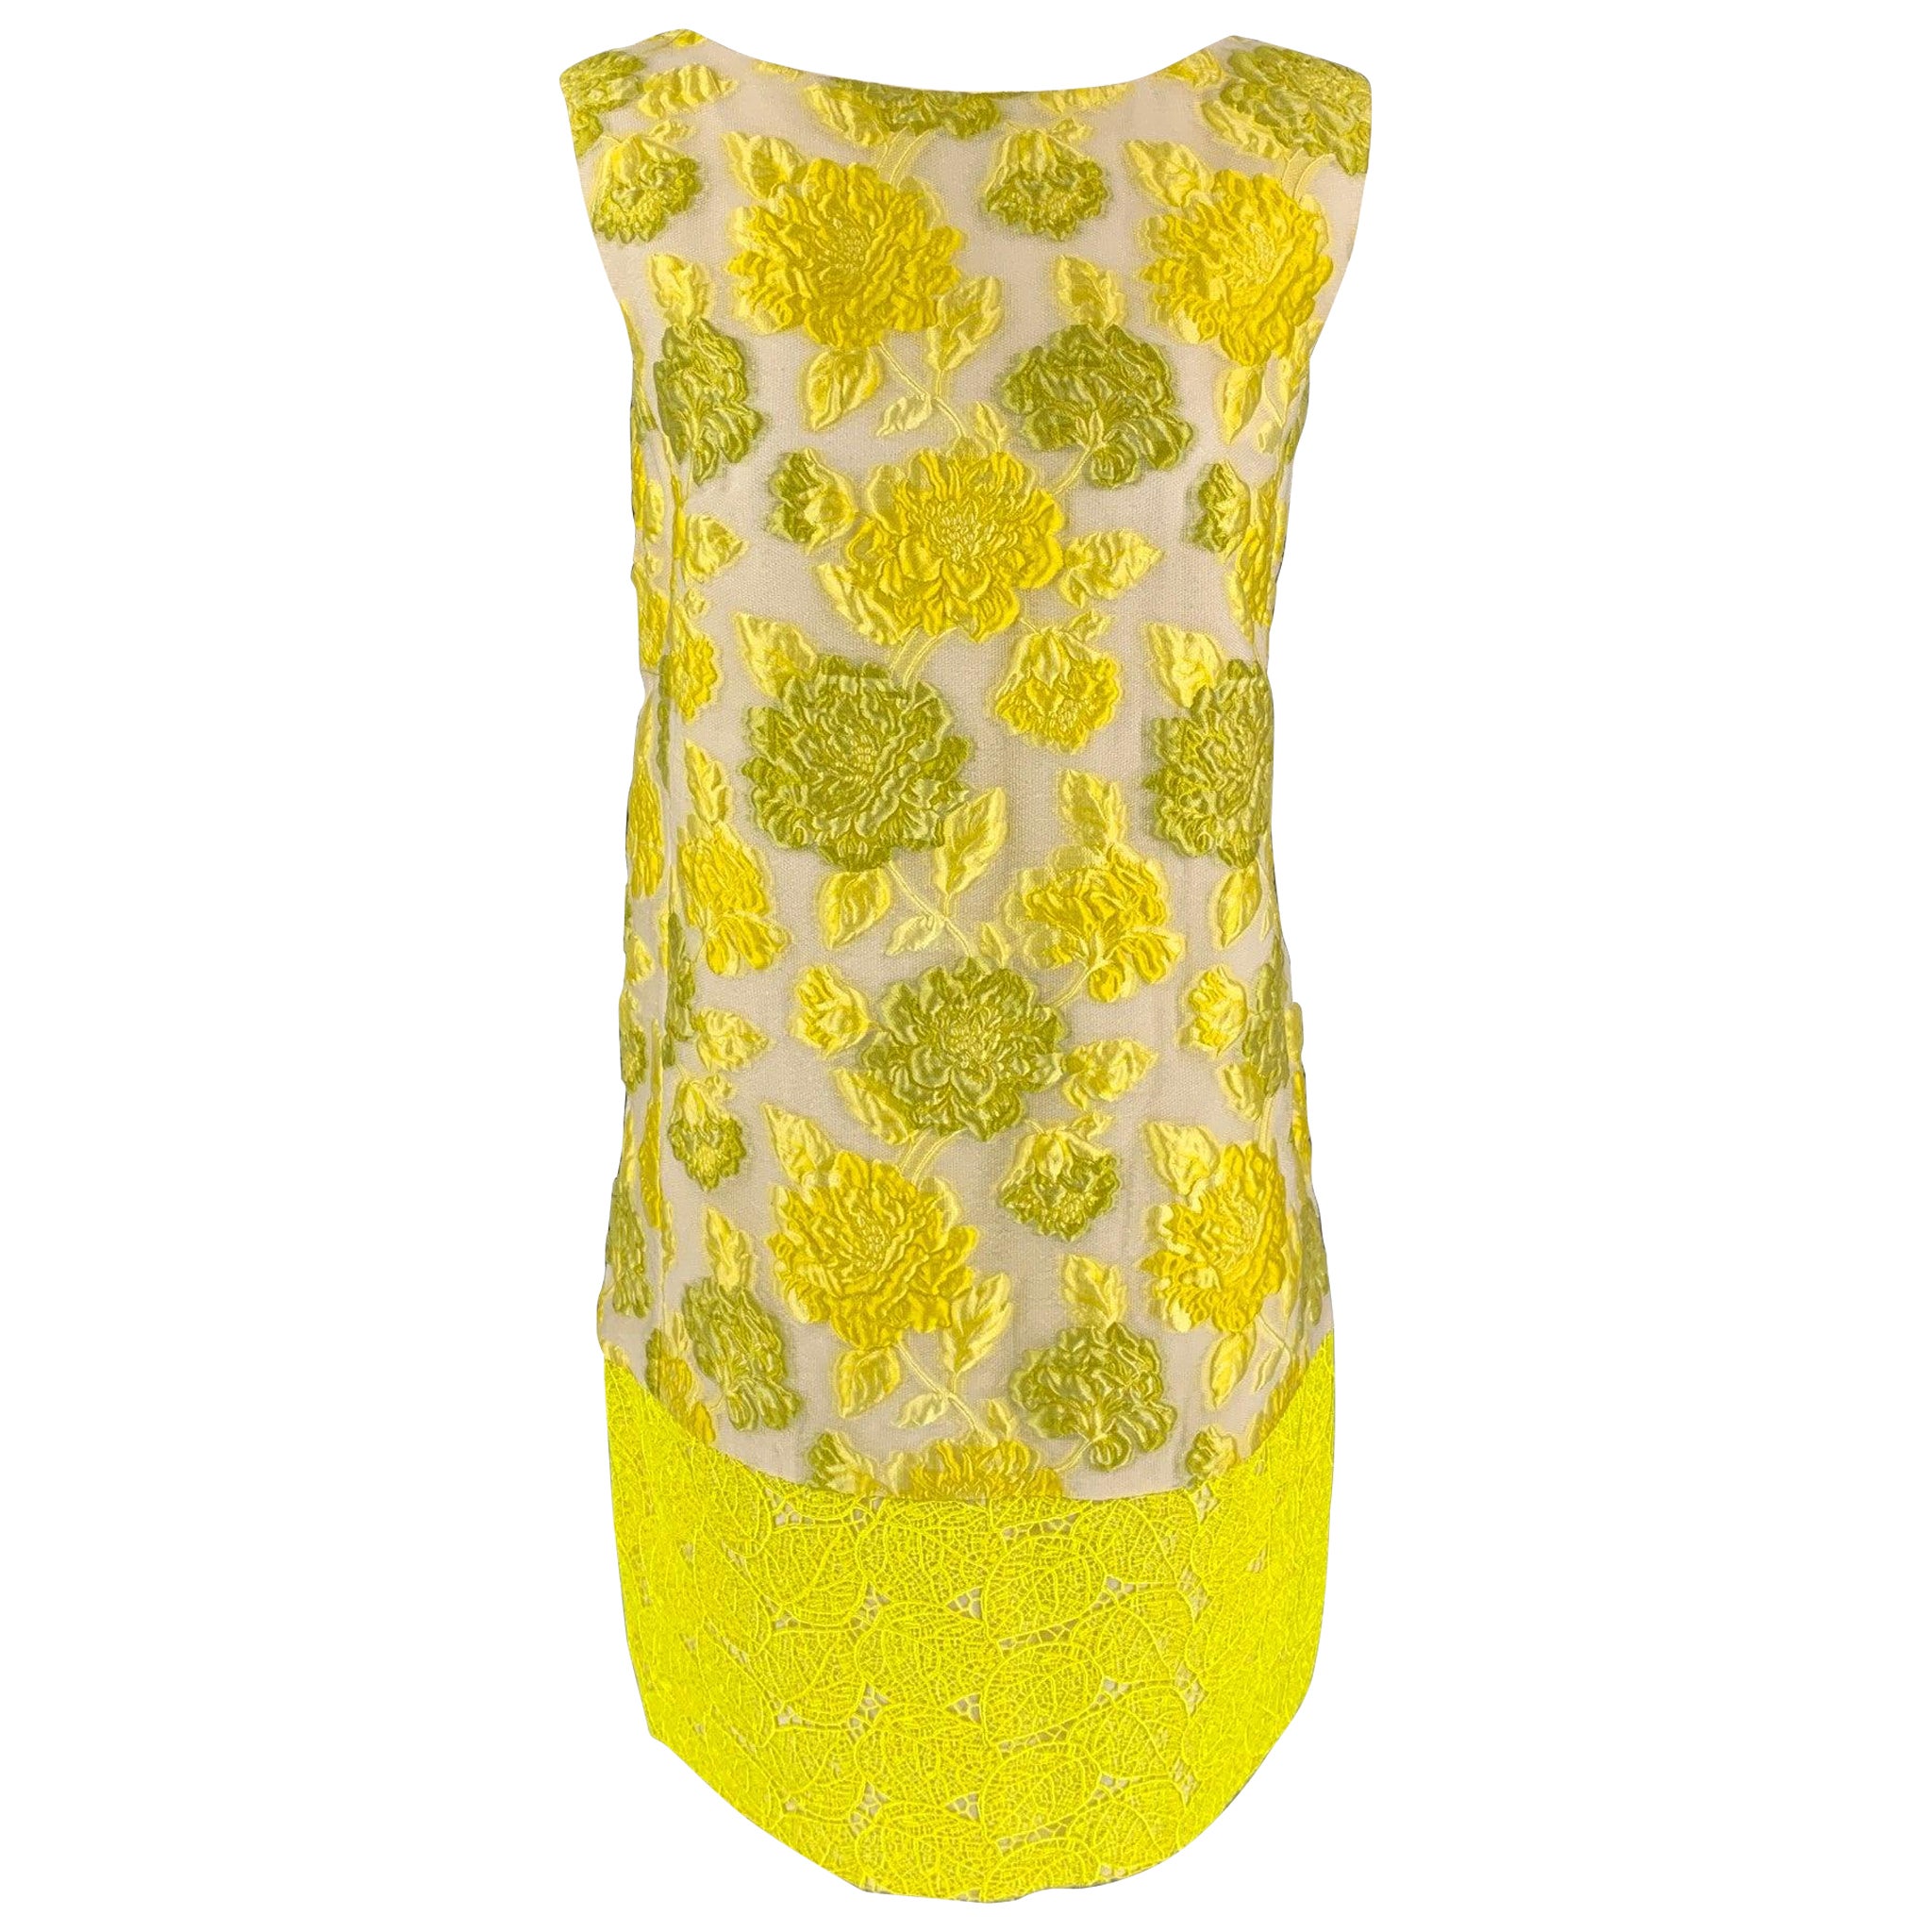 GIAMBATTISTA VALLI - Robe en dentelle jacquard mélangée polyester jaune et beige, taille S en vente